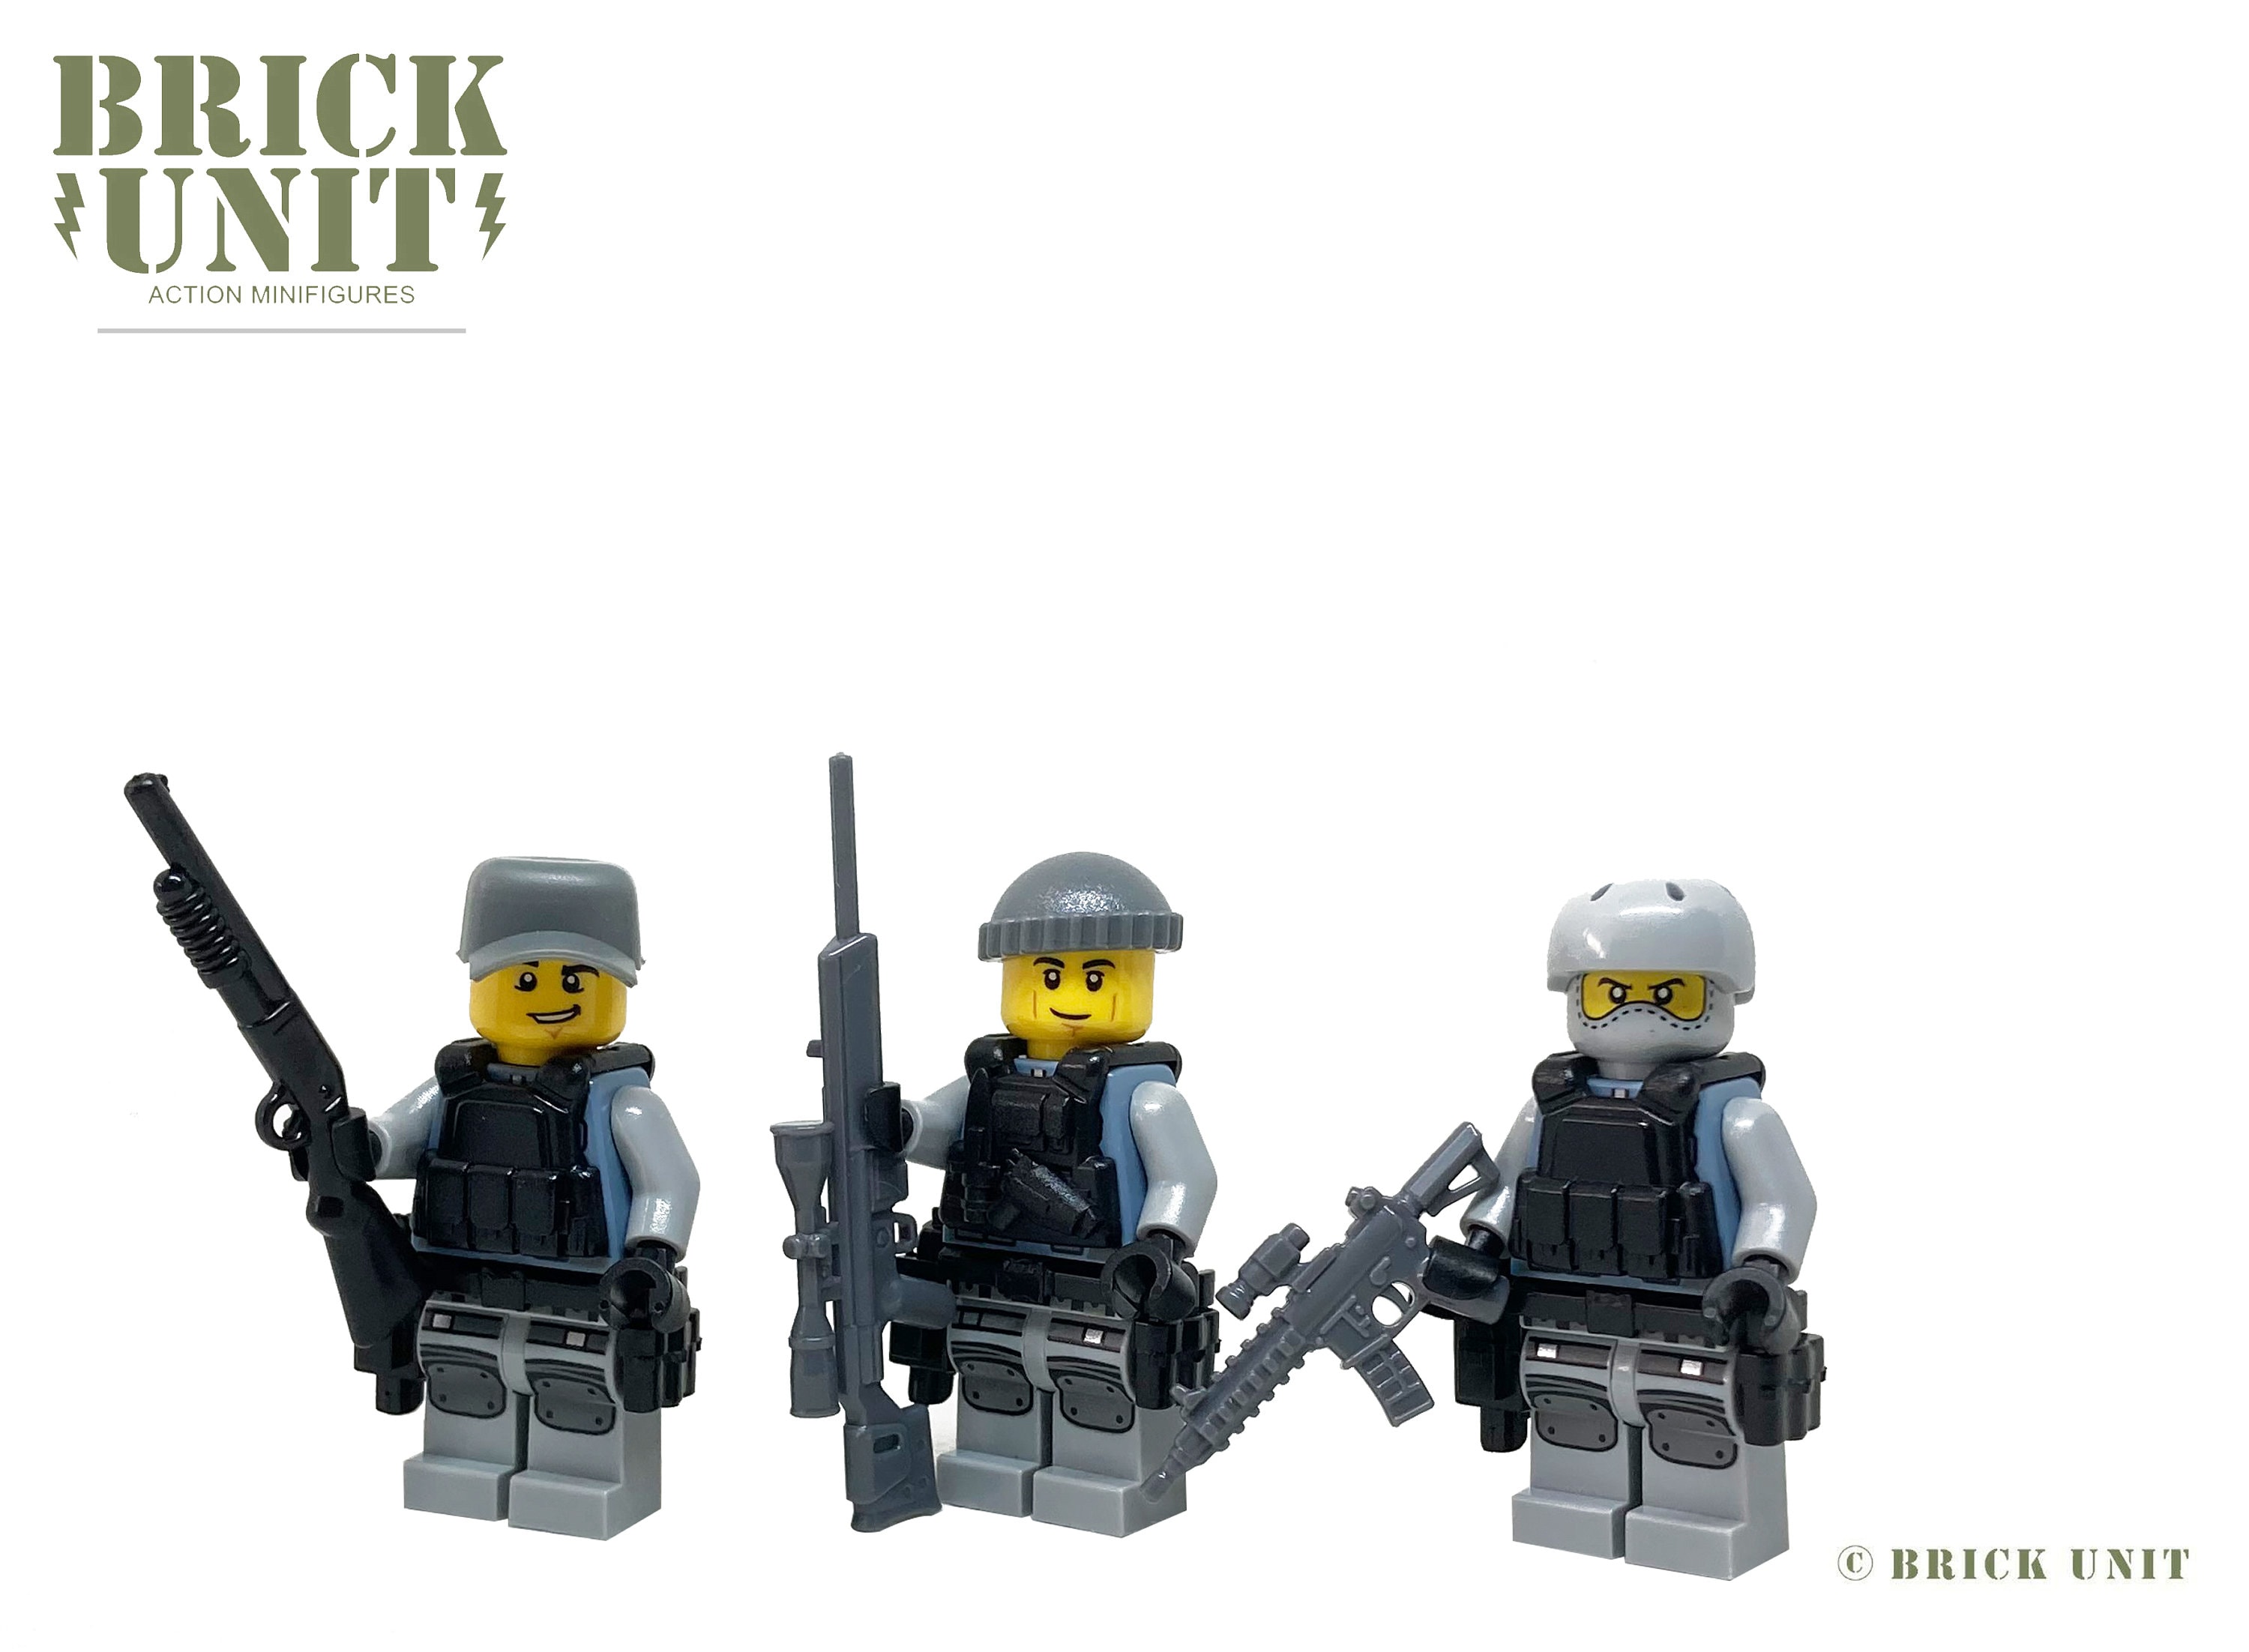 LEGO Police SWAT 2 - Modern Warfare 